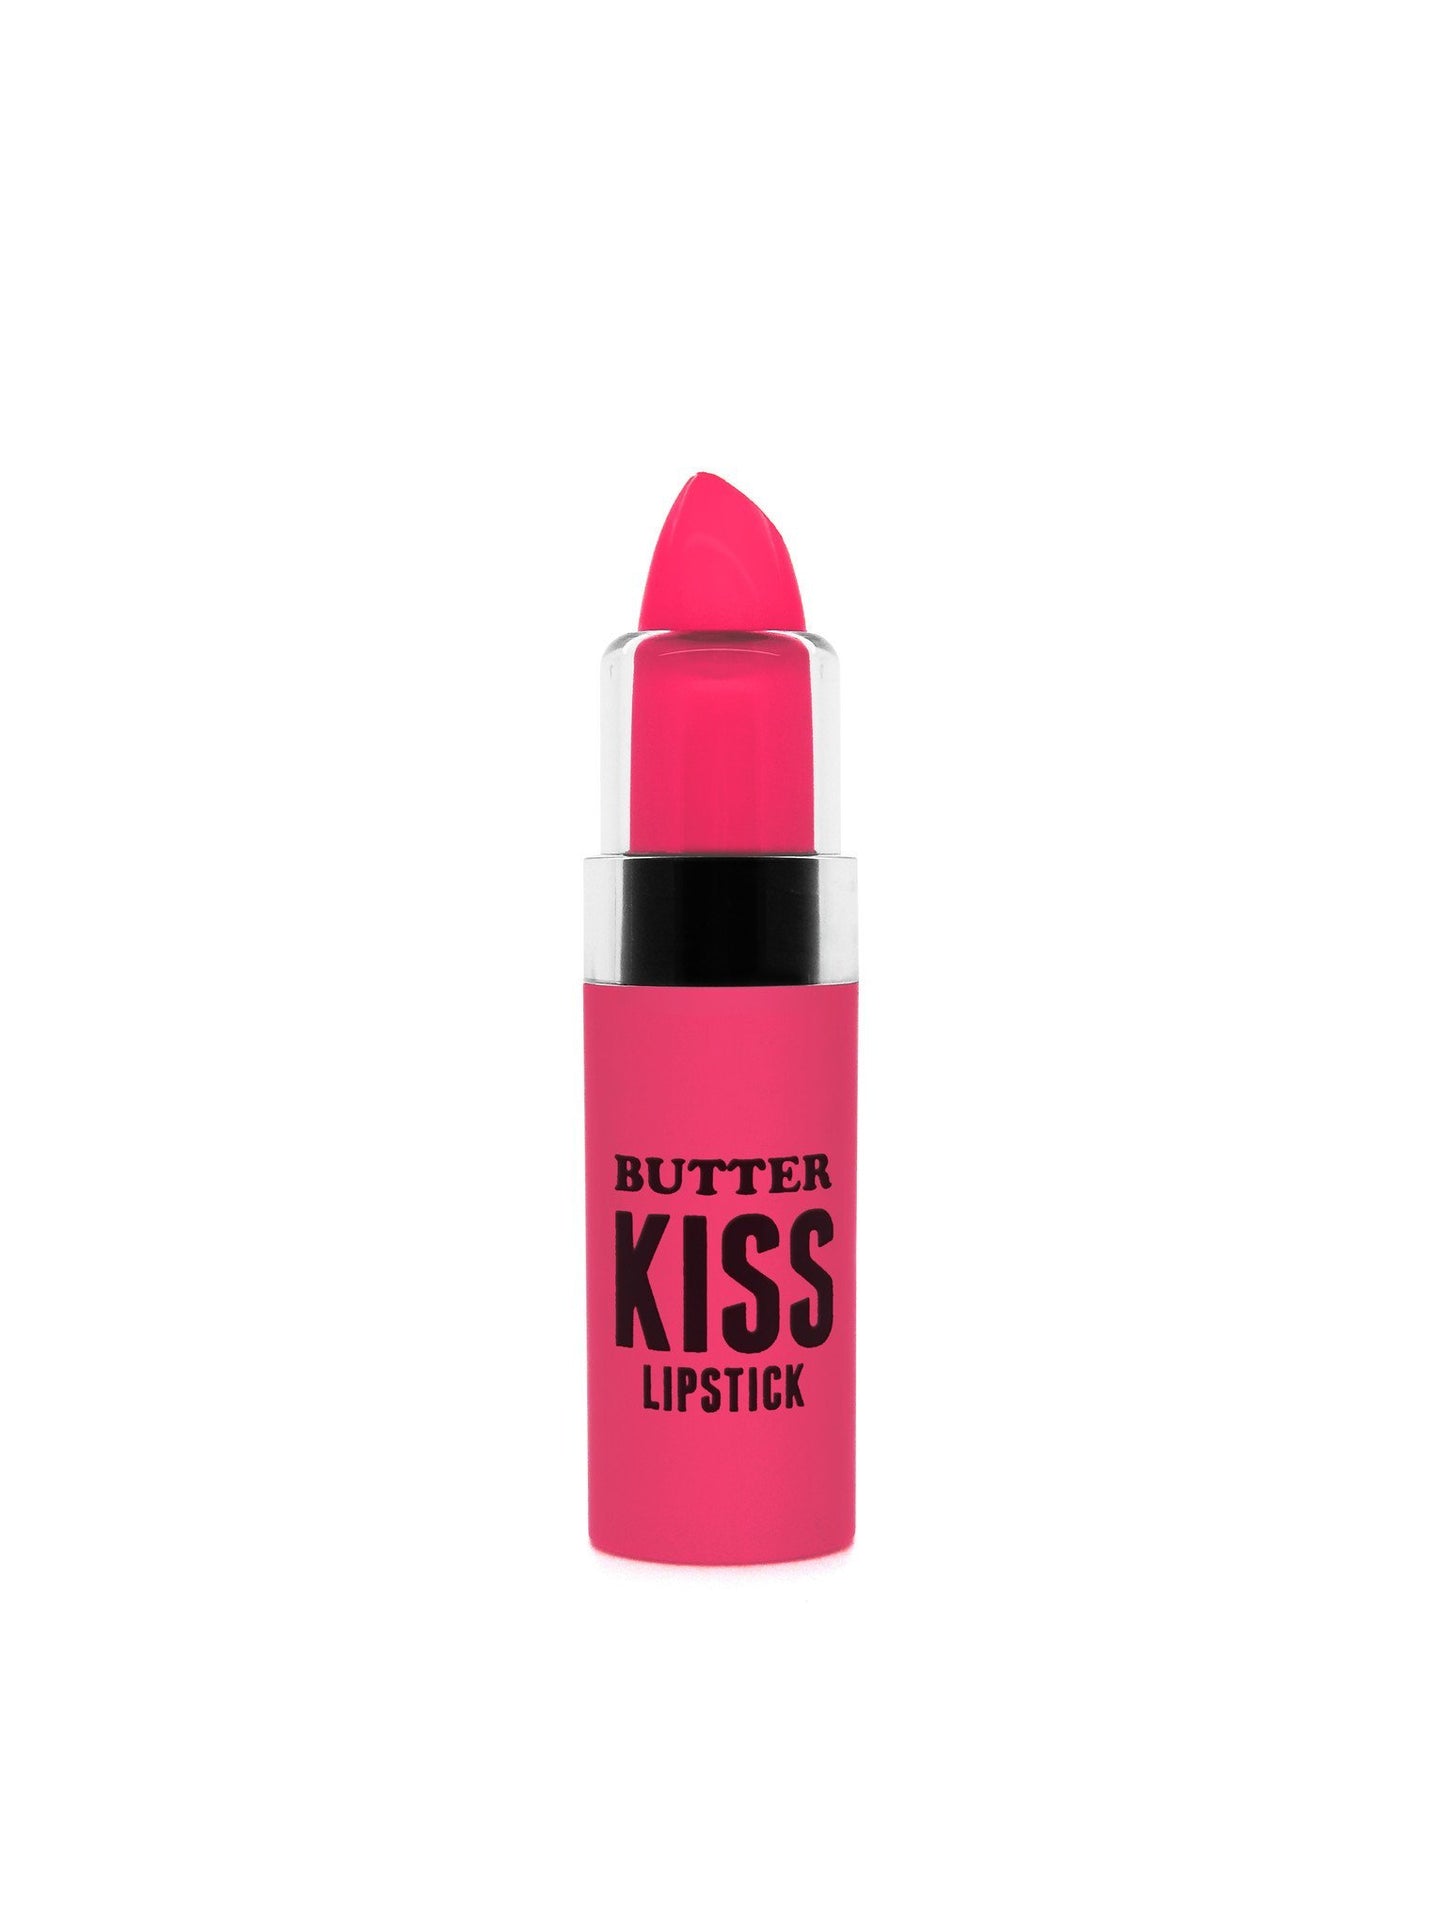 W7 COSMETICS Butter Kiss Lipstick - Red Tulip, 0.10 Oz (3g) - ADDROS.COM